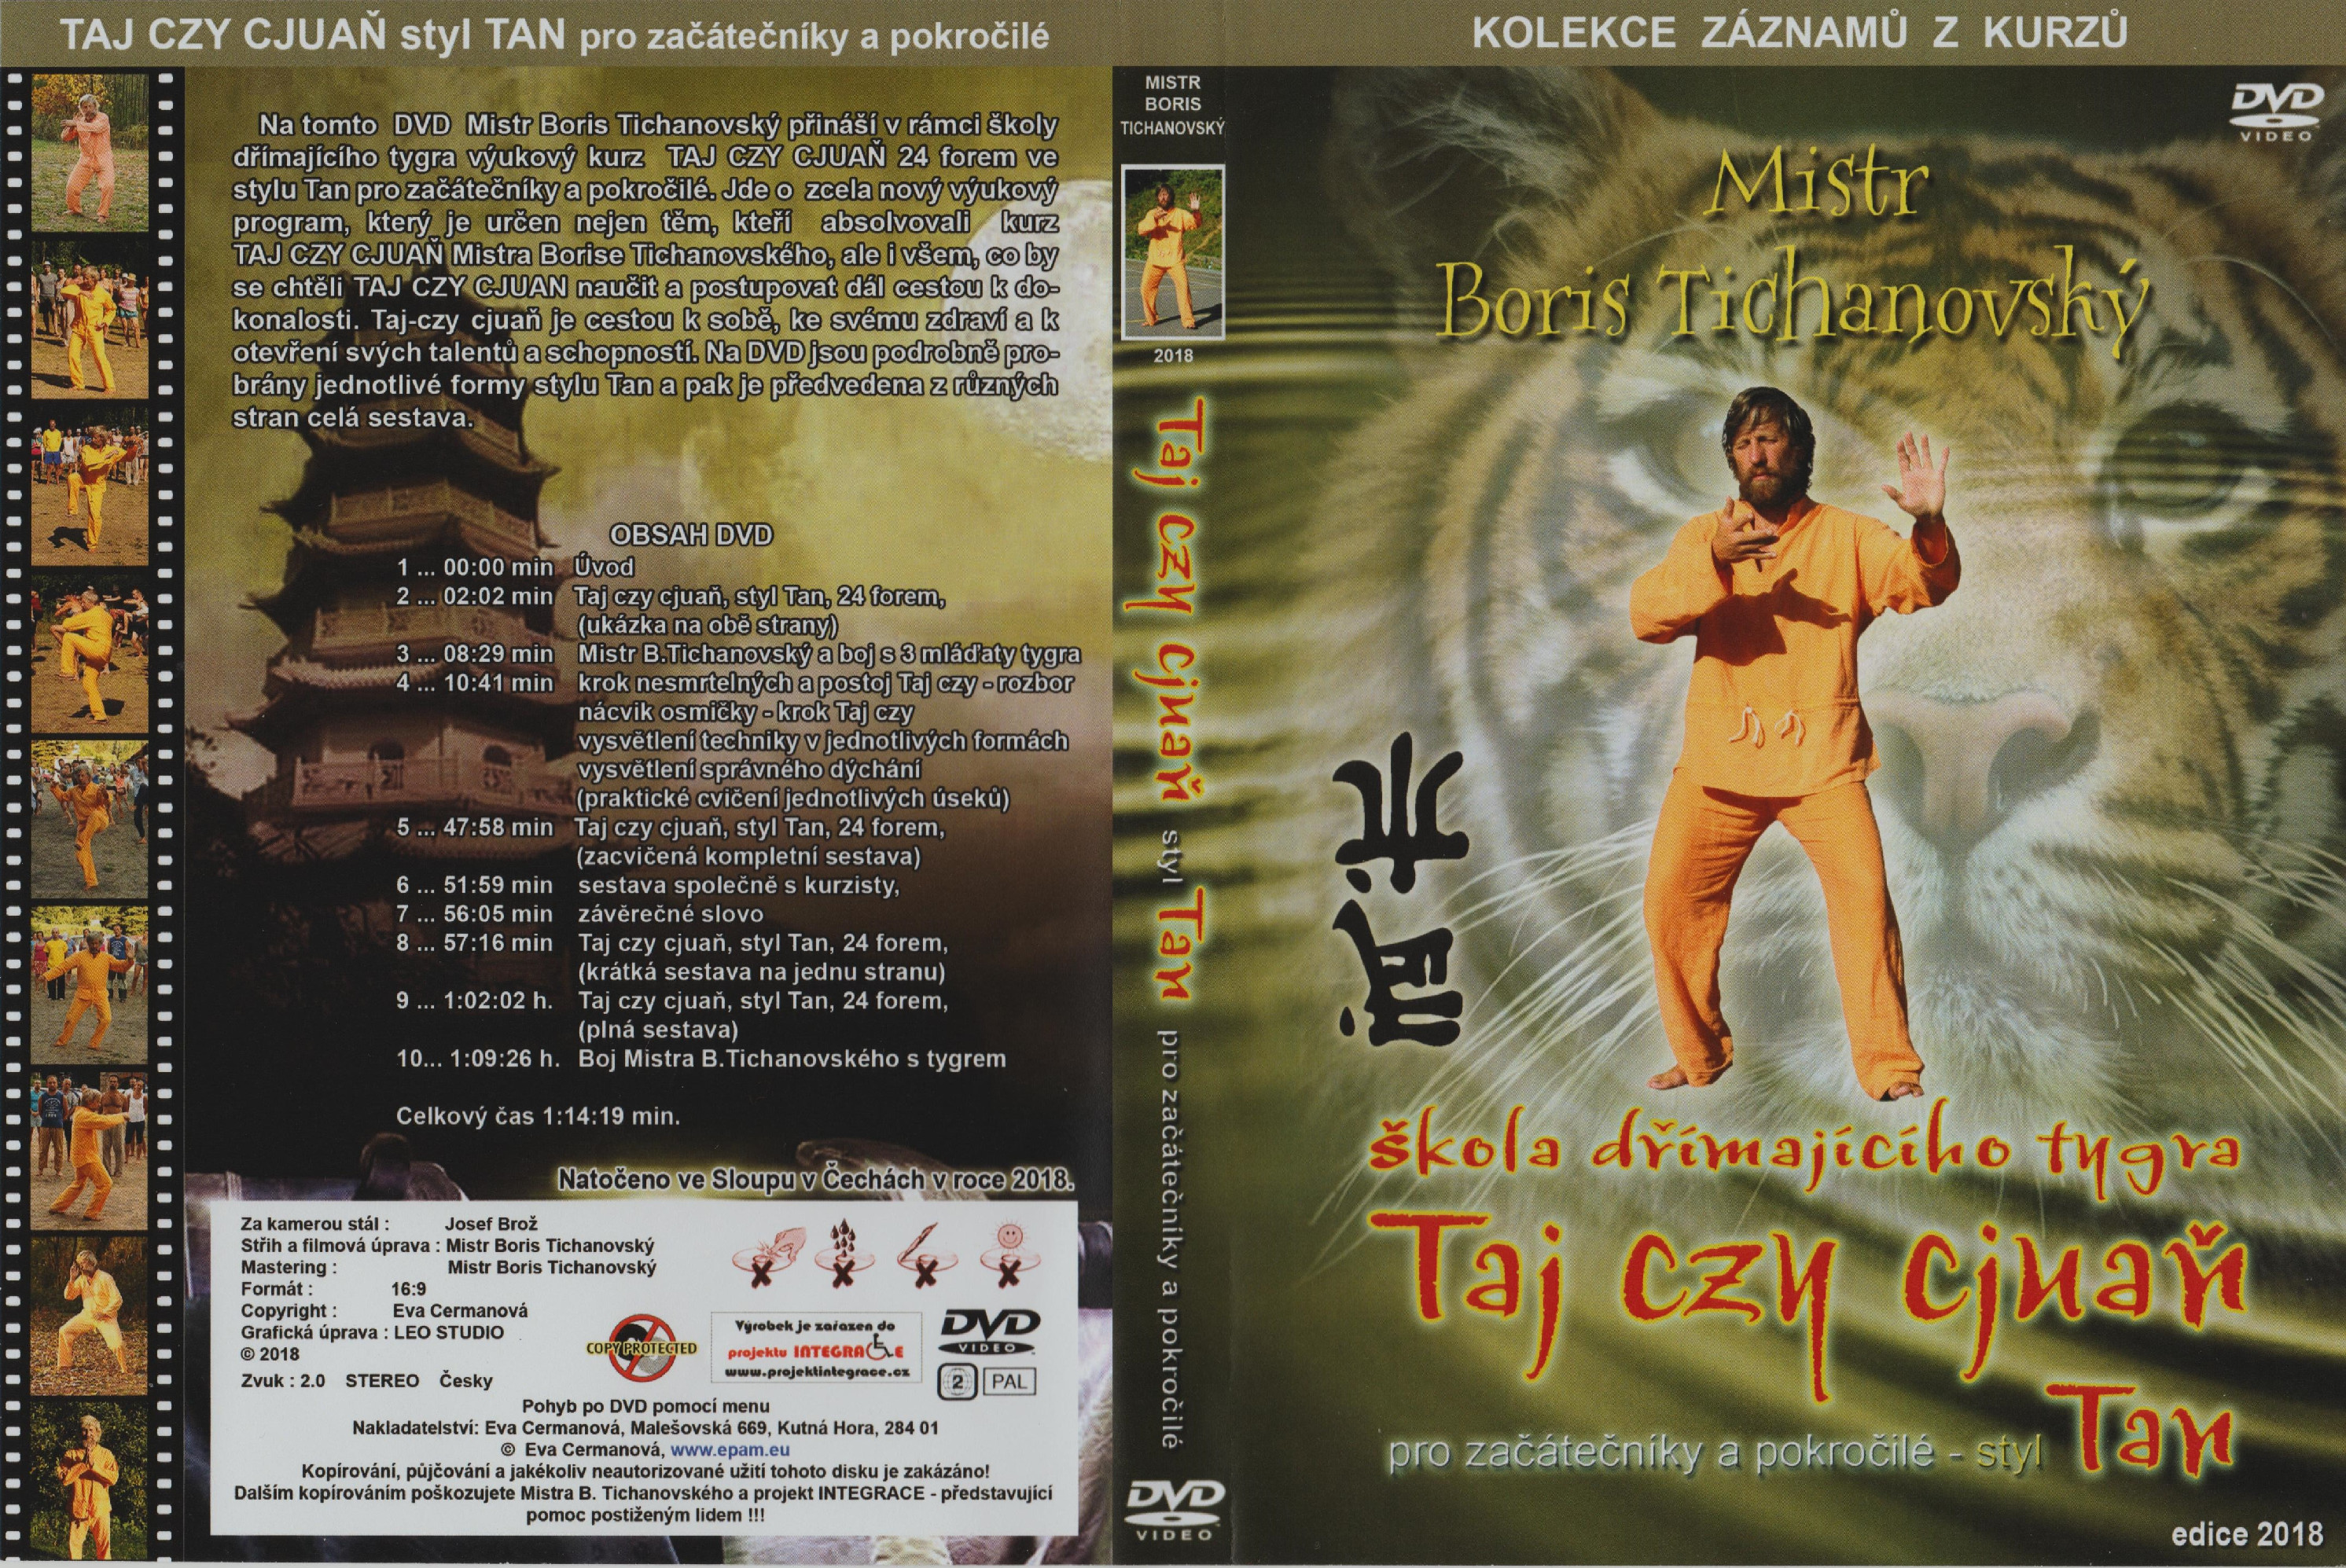 DVD Taj czy cjuaň obsah cvičení a masáže: 24 forem styl Tan